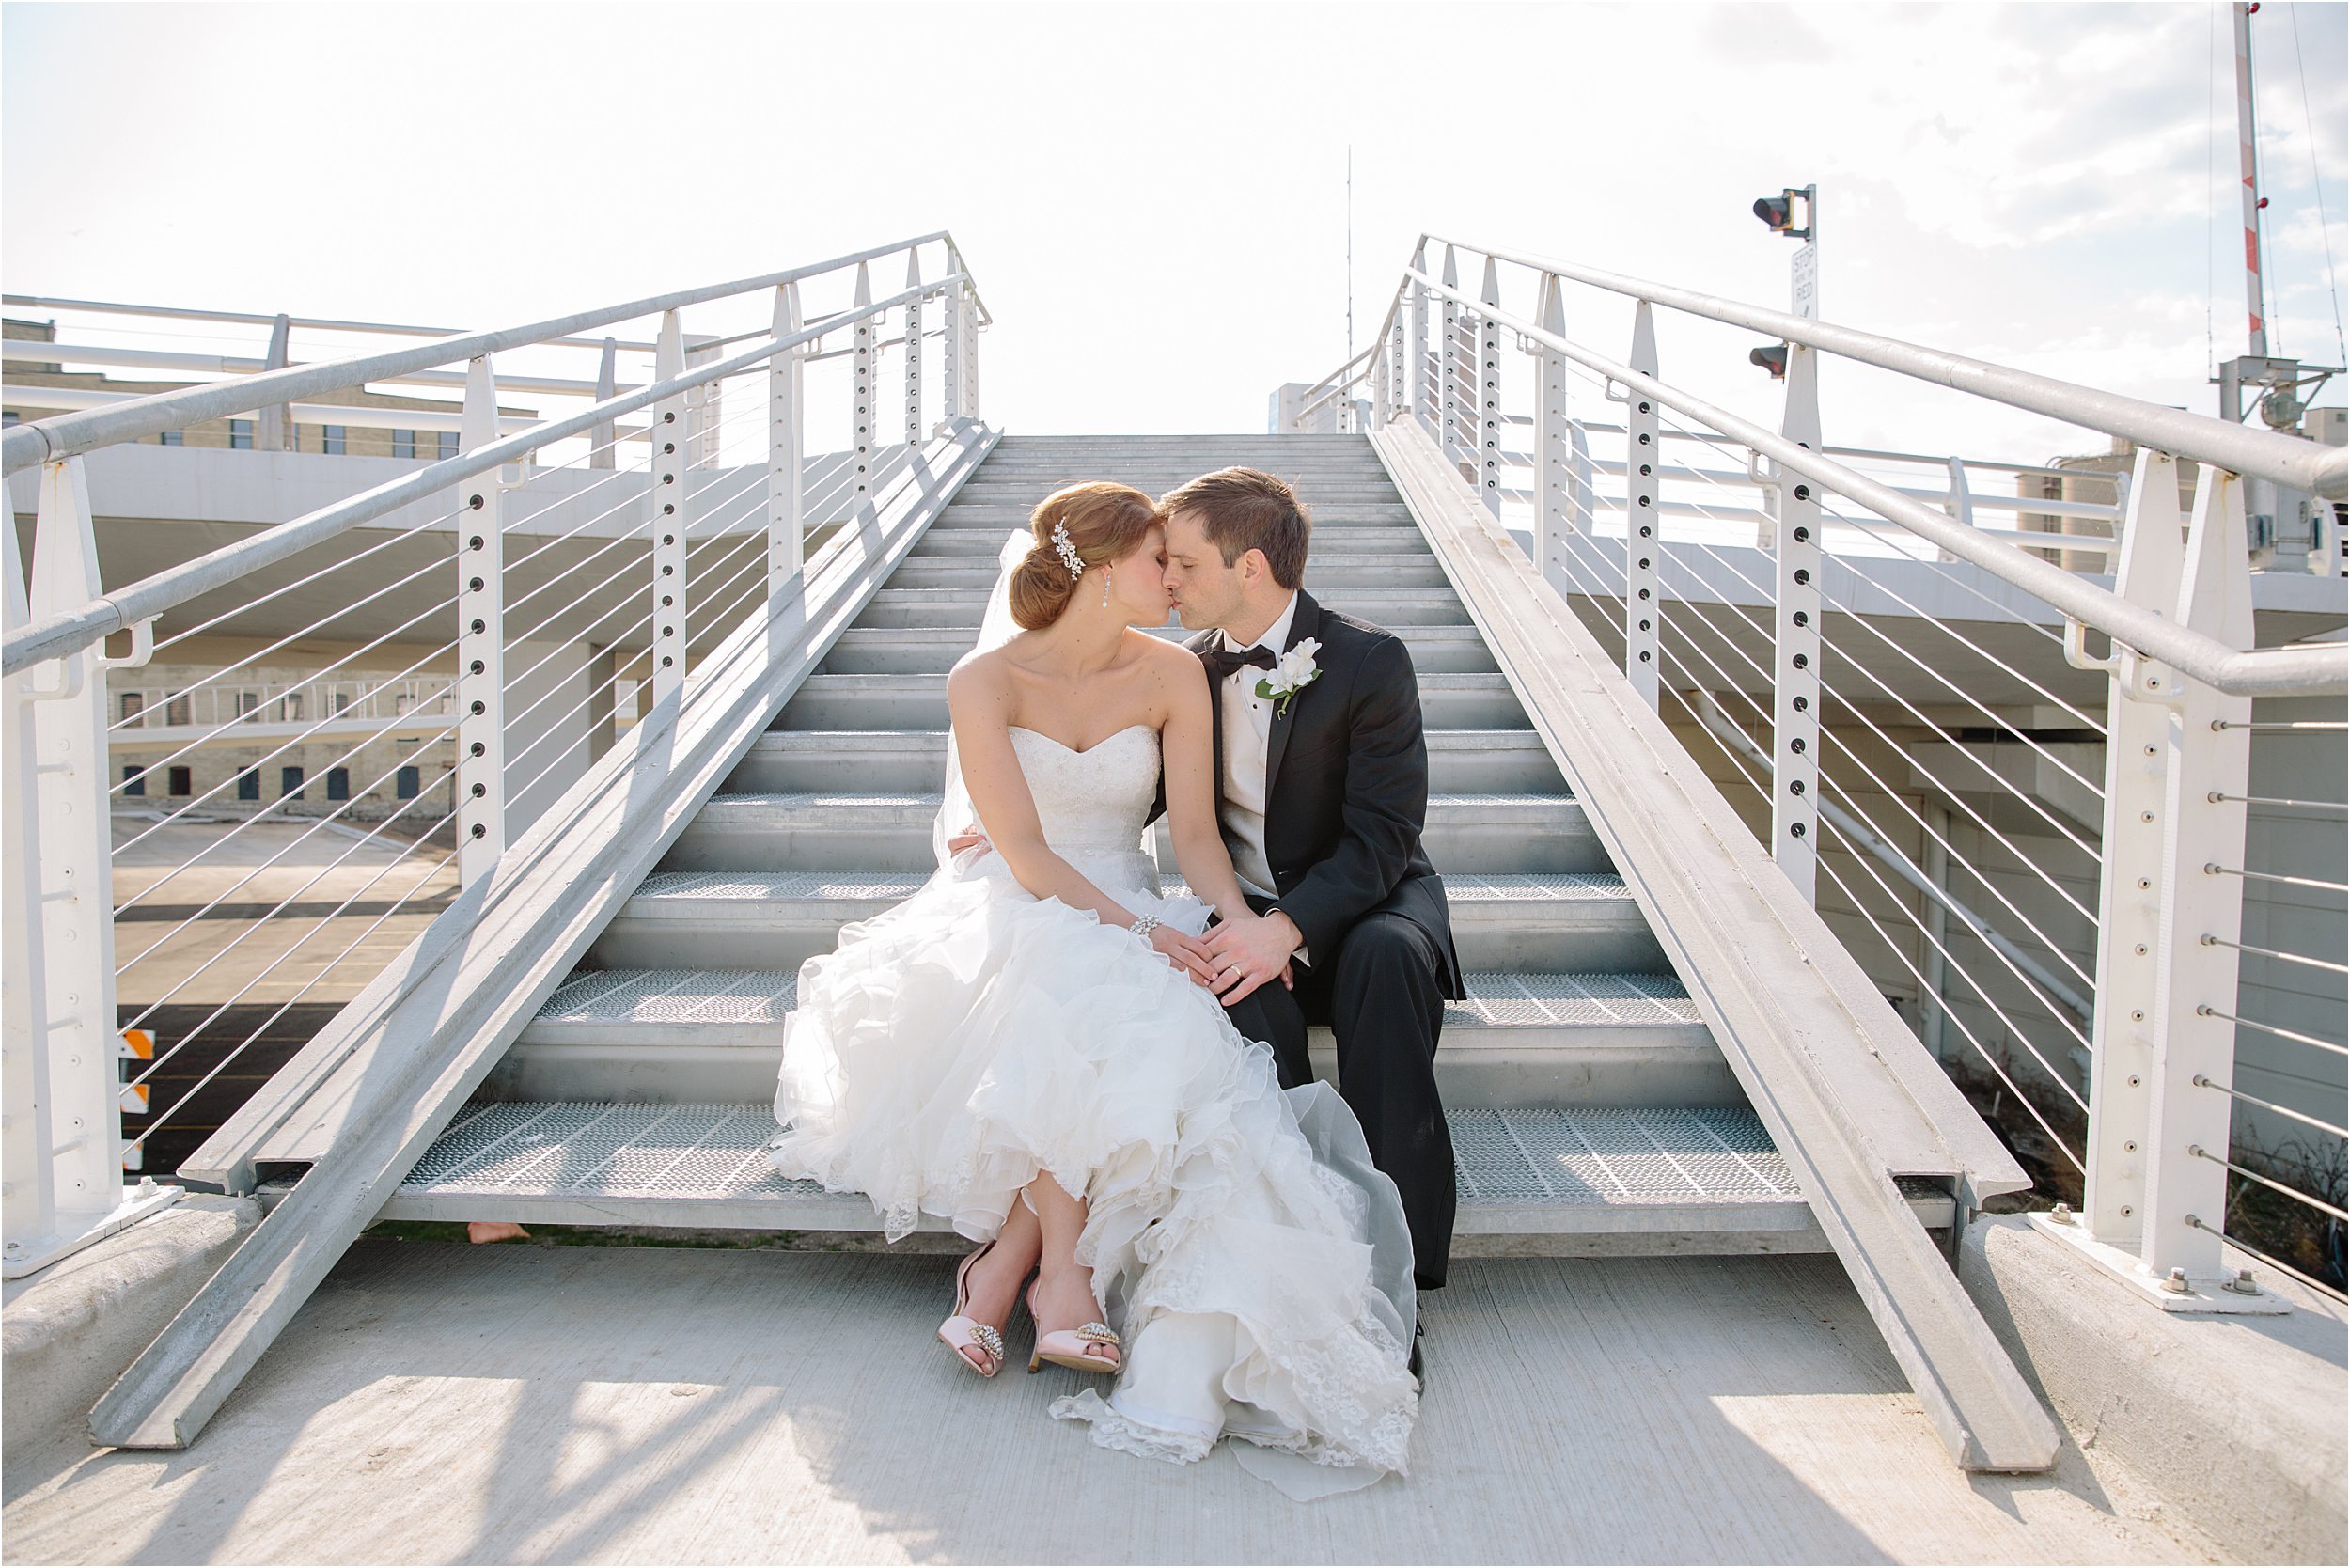 26-metal-stairs-seated-bridal-couple.JPG